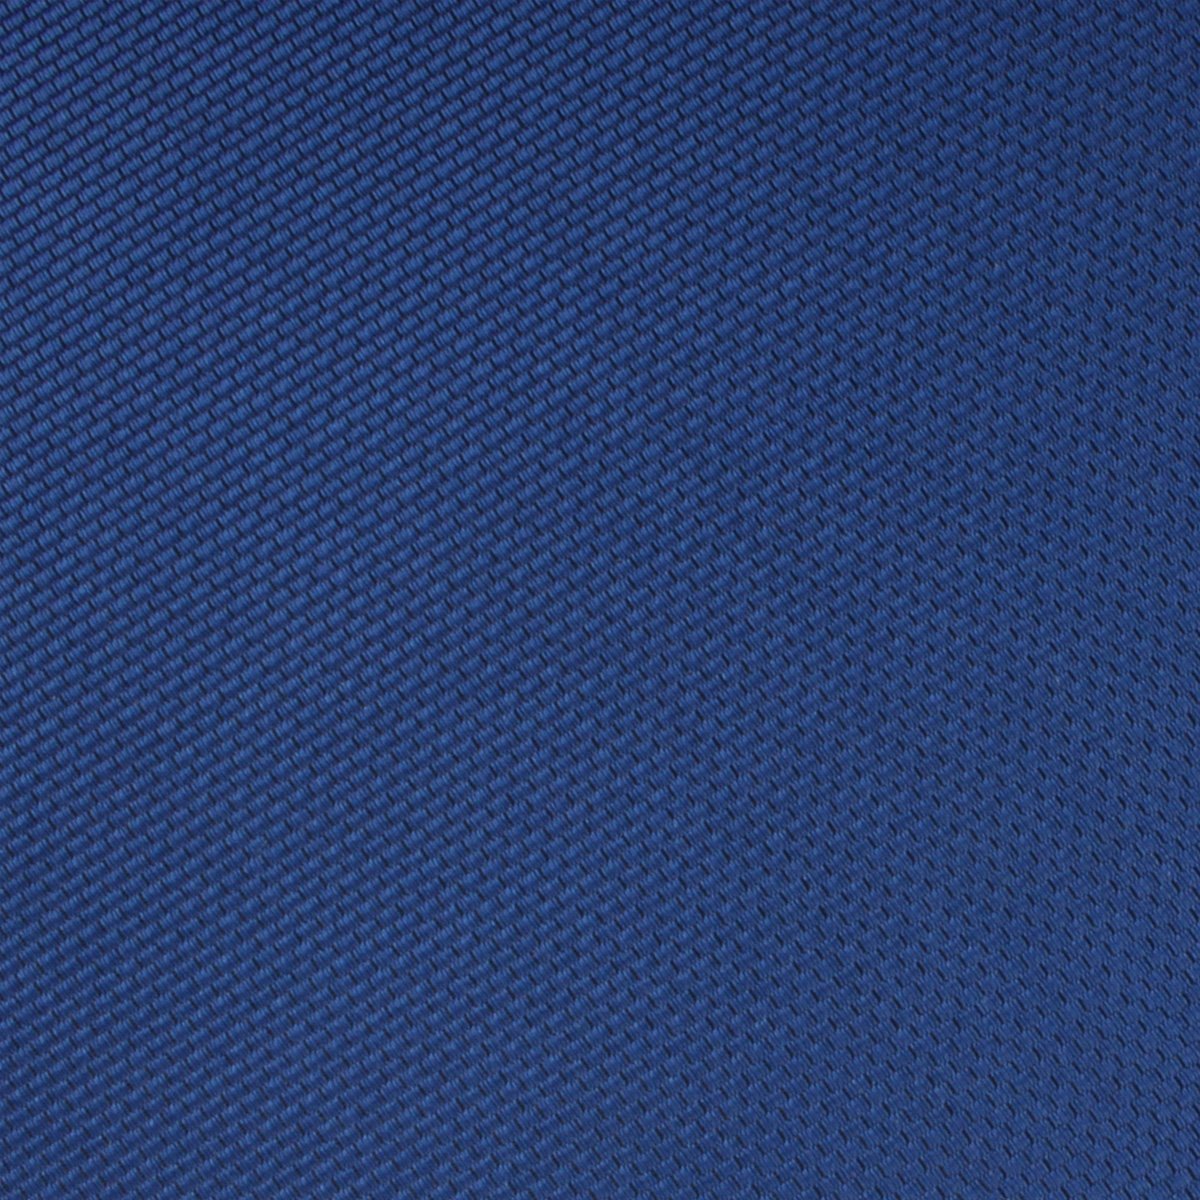 Ultramarine Classic Navy Blue Weave Necktie Fabric